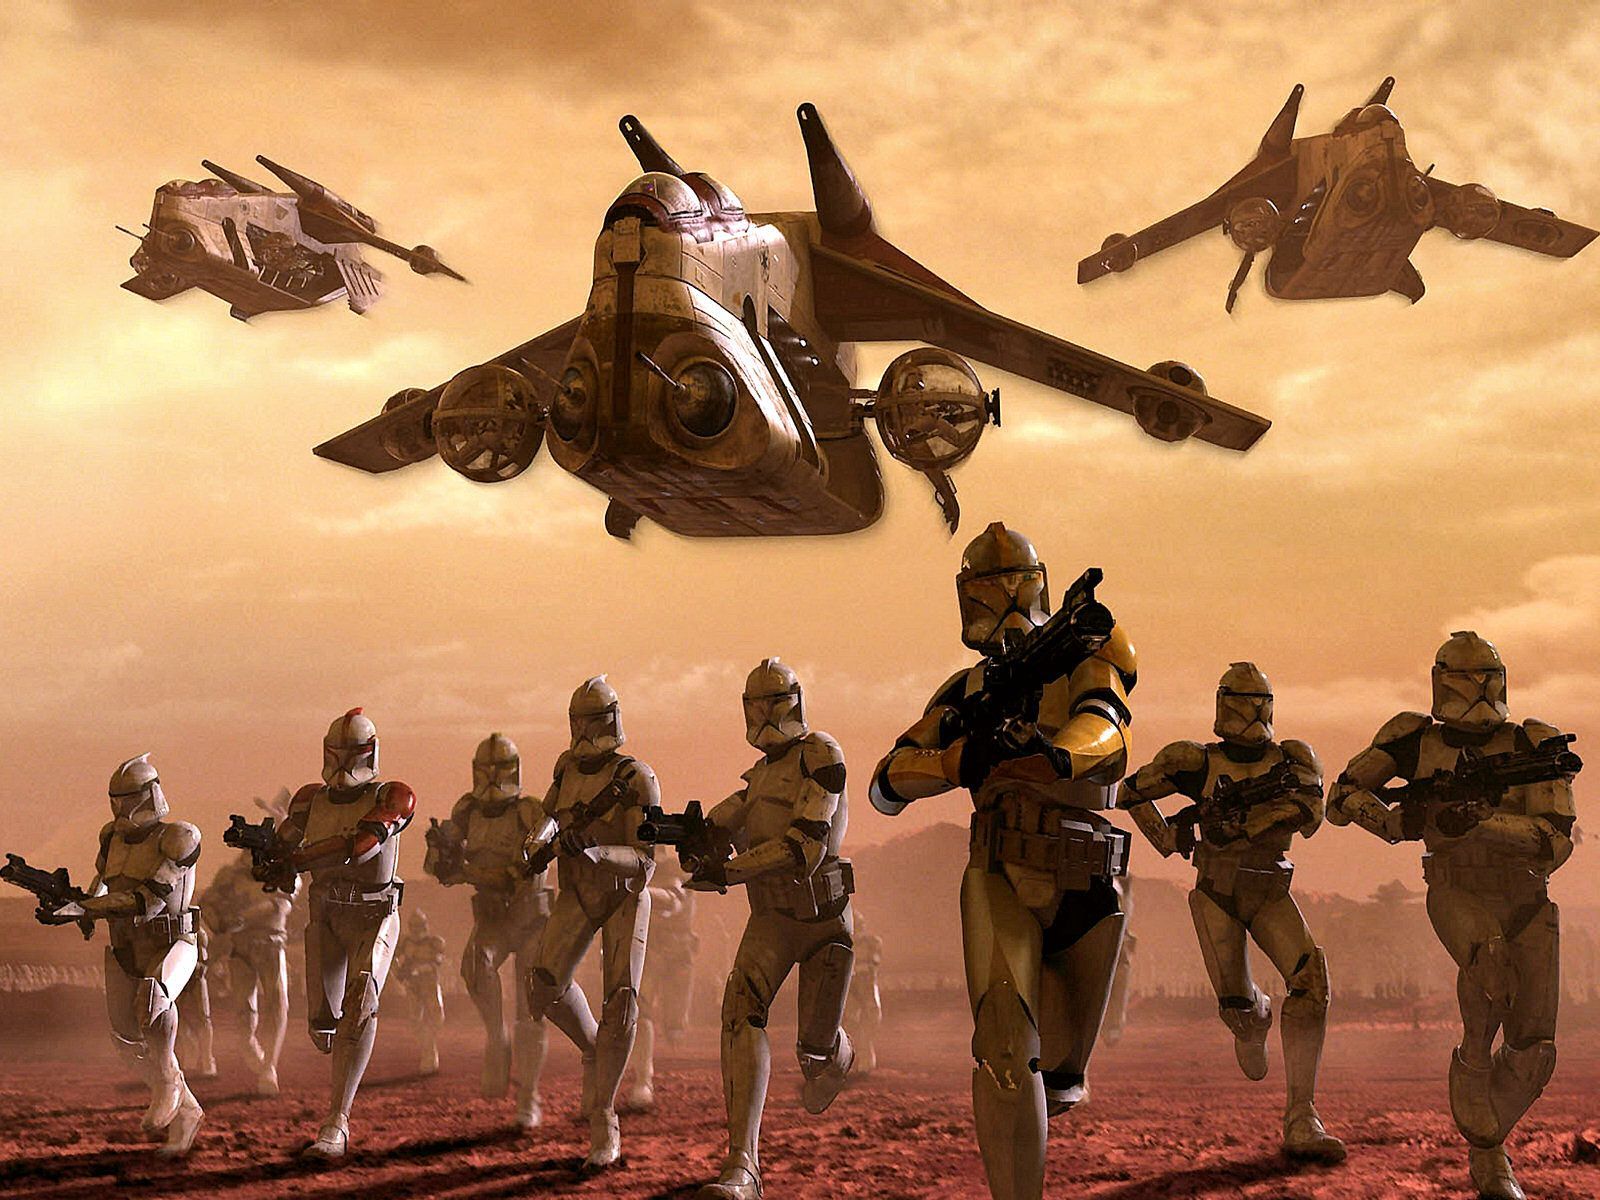 Clone Troopers. Star wars image, Star wars ships, Star wars wallpaper